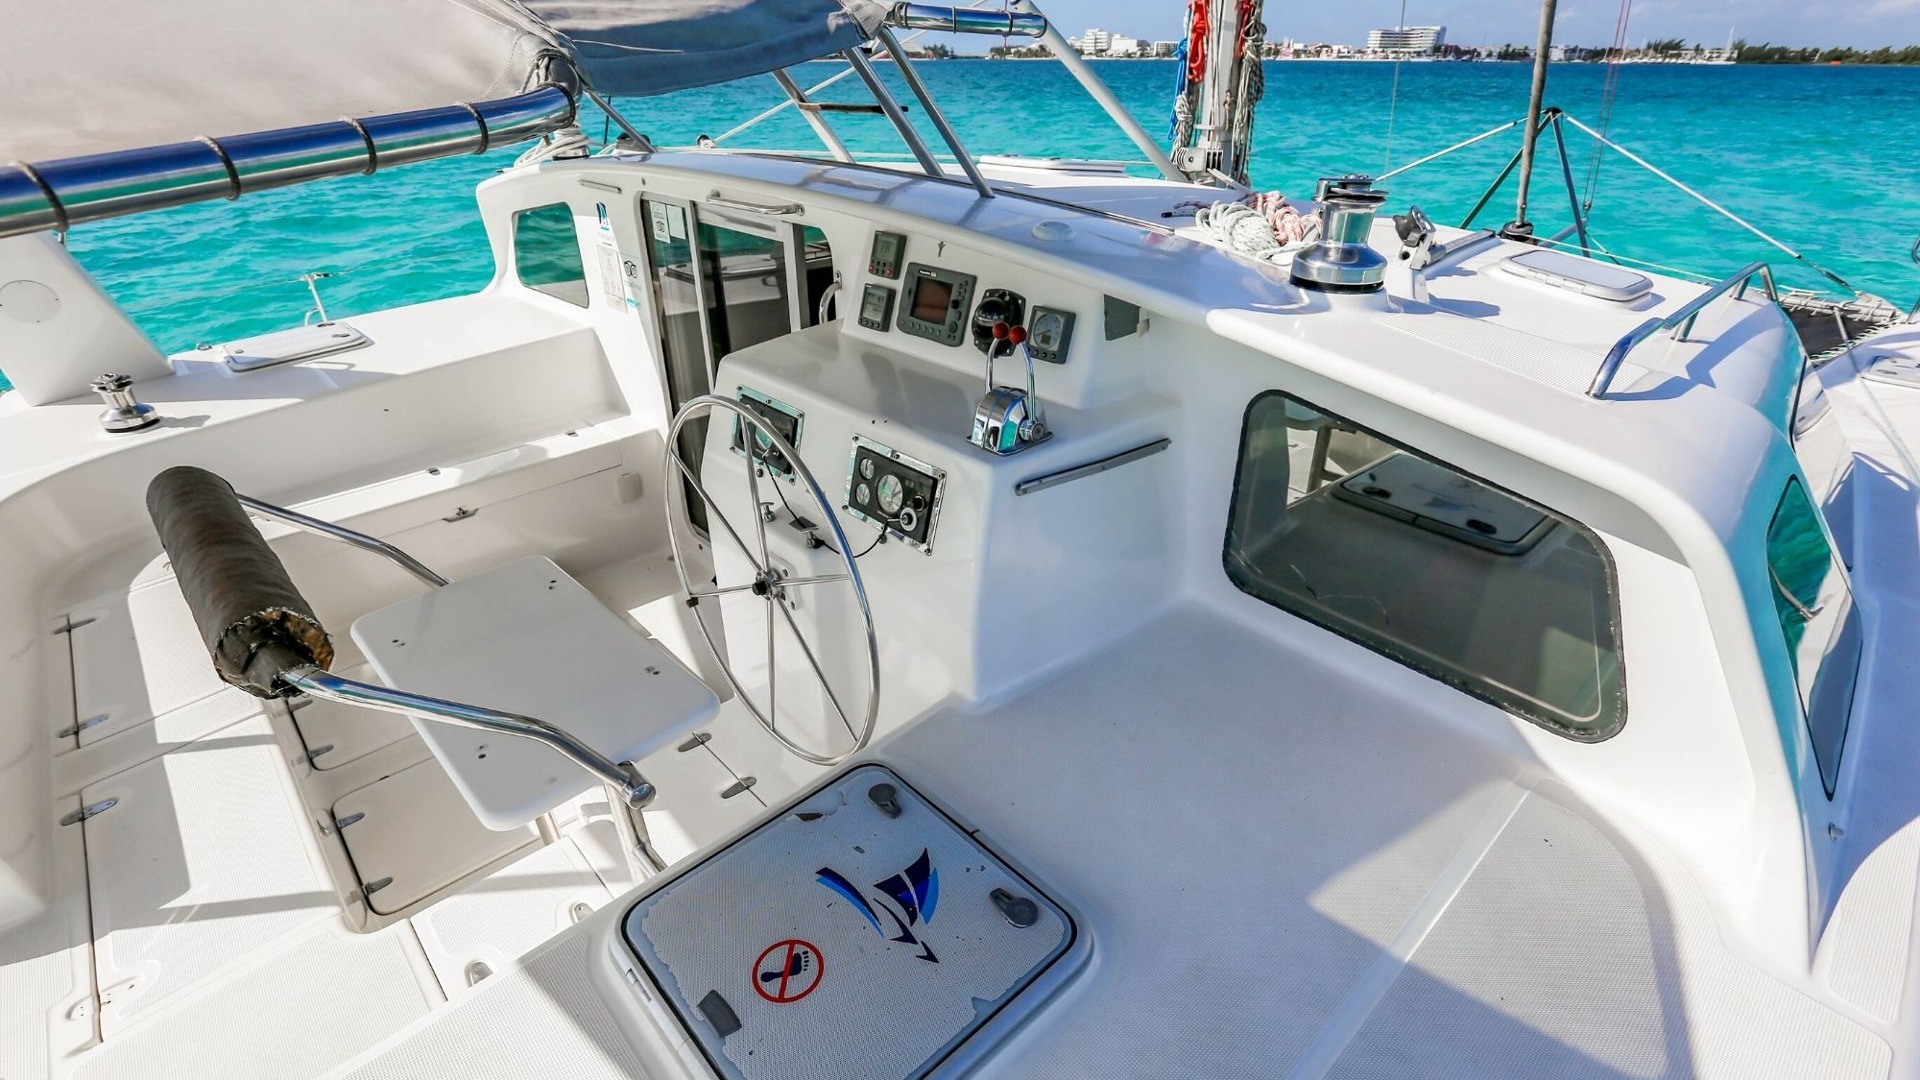 Paradise explorer - Private Isla Mujeres catamaran tour - Cancun Sailing